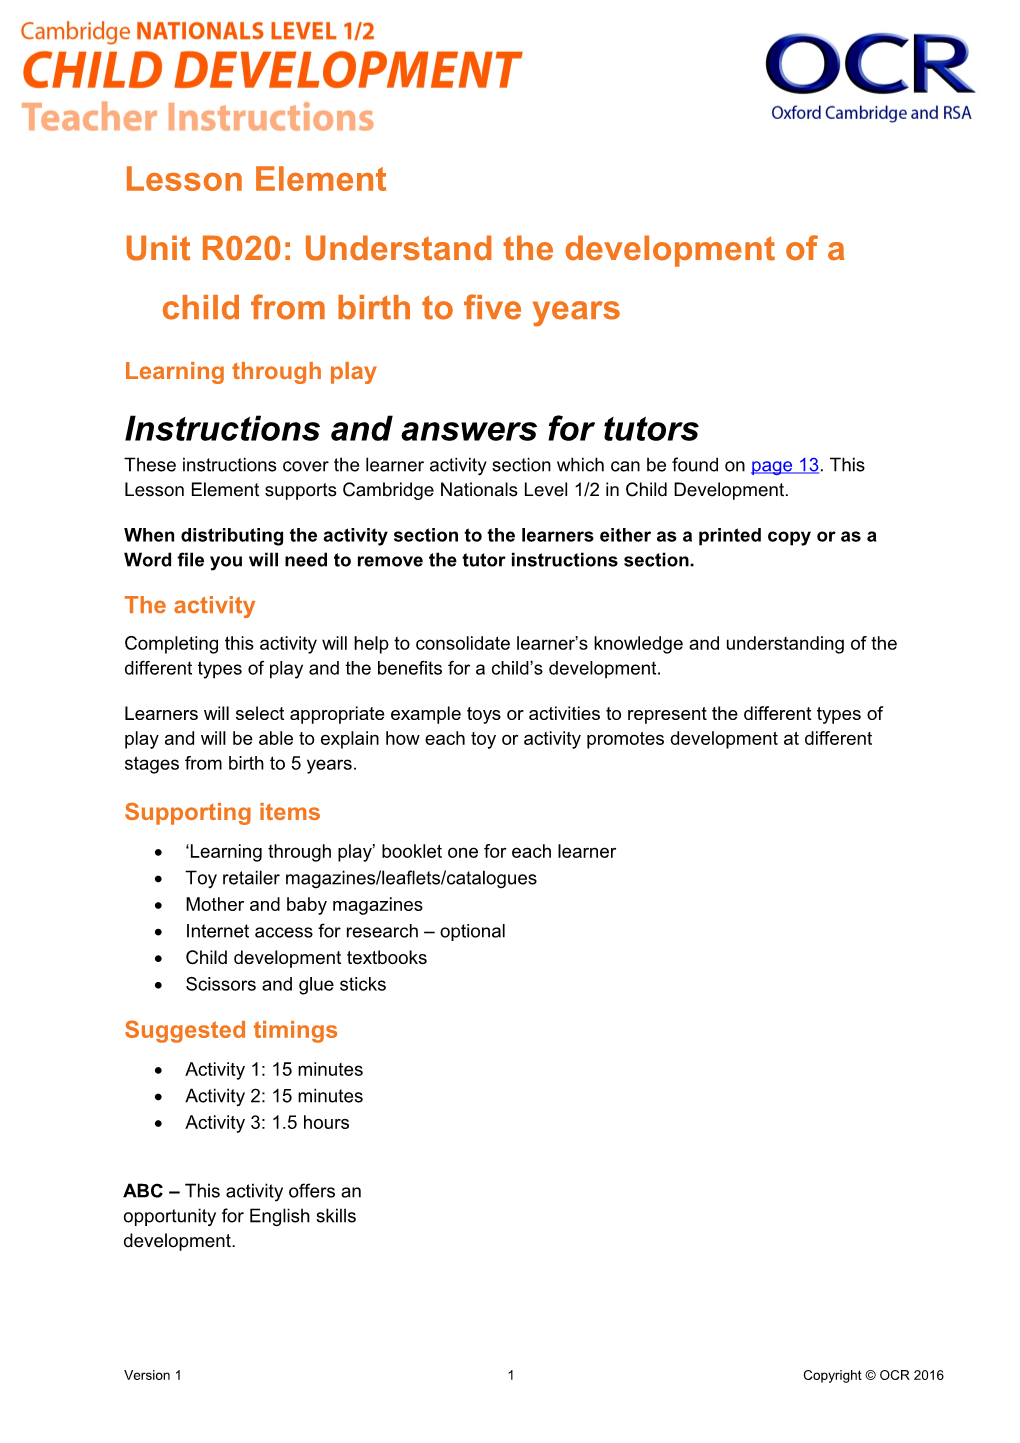 Cambridge Nationals Child Development Lesson Element Unit R020 Understand the Development